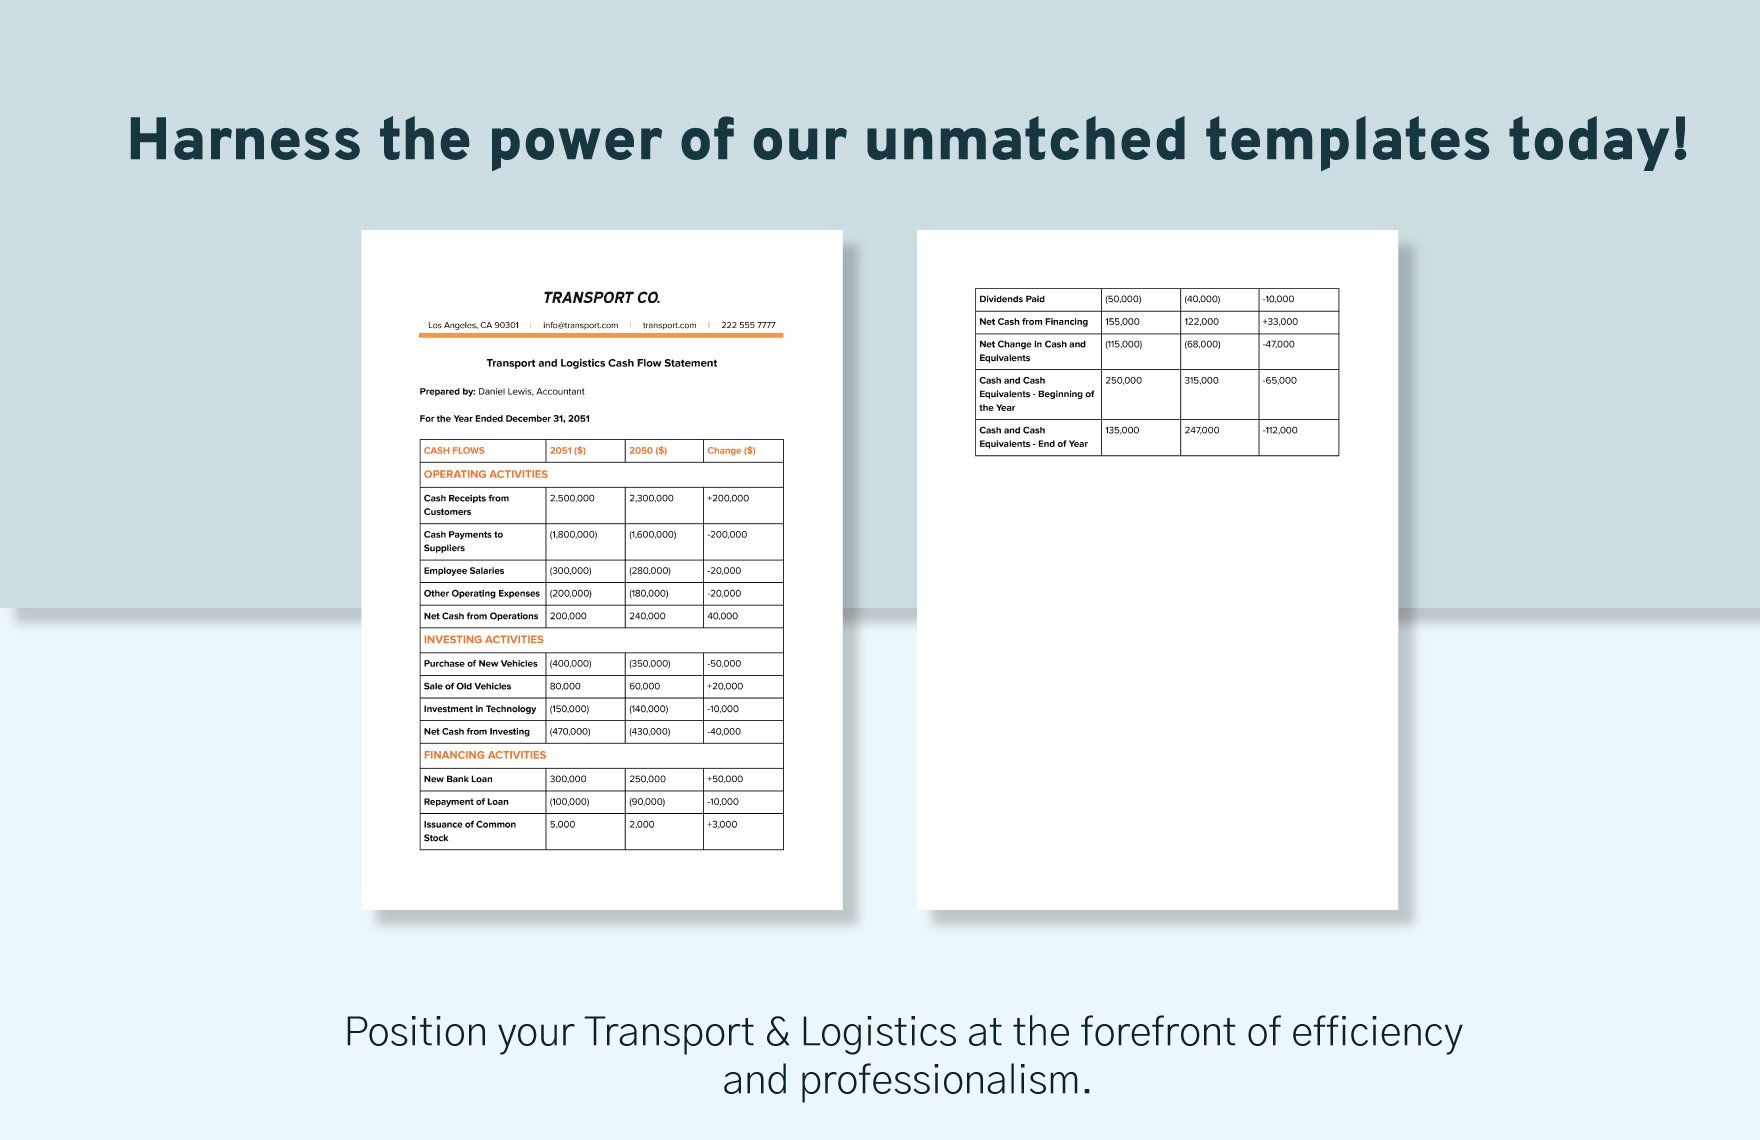 Transport and Logistics Cash Flow Statement Template